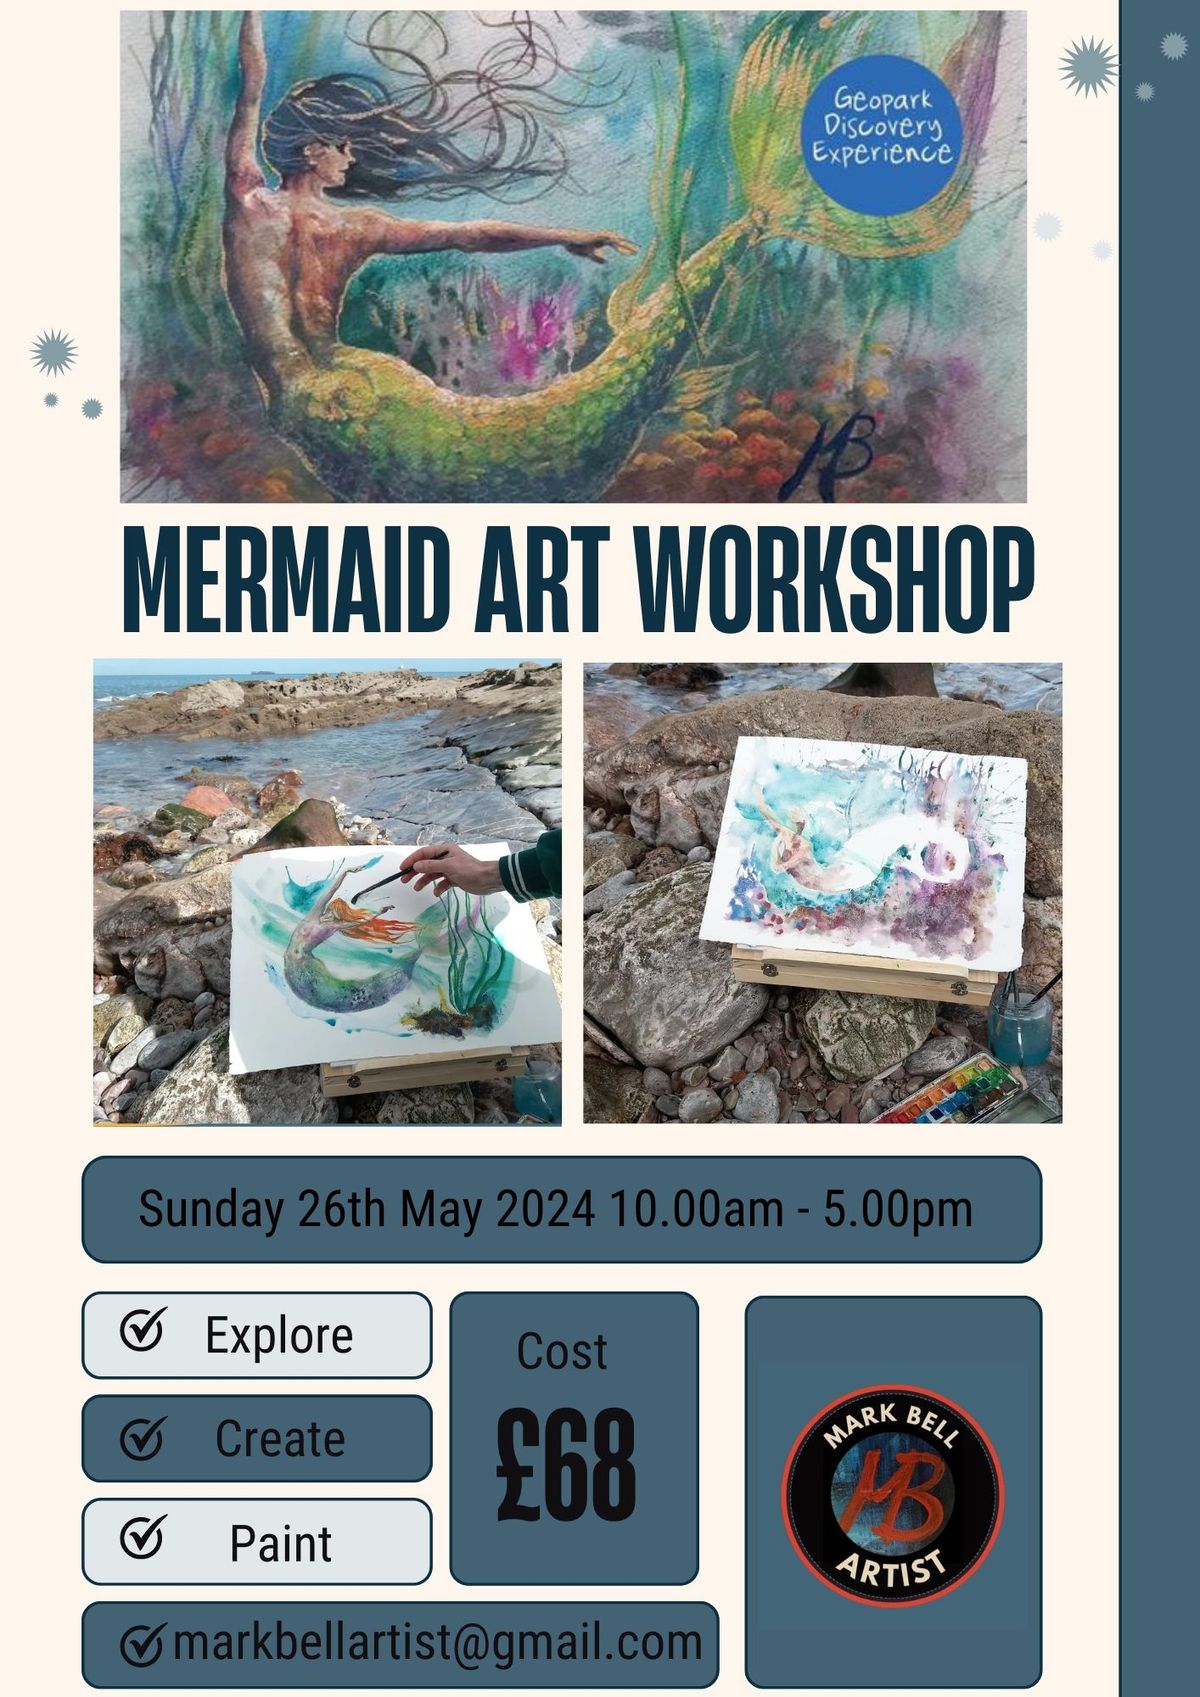 Mermaid Art Workshop with Mark Bell - Brixham - Sunday 26th May 2024